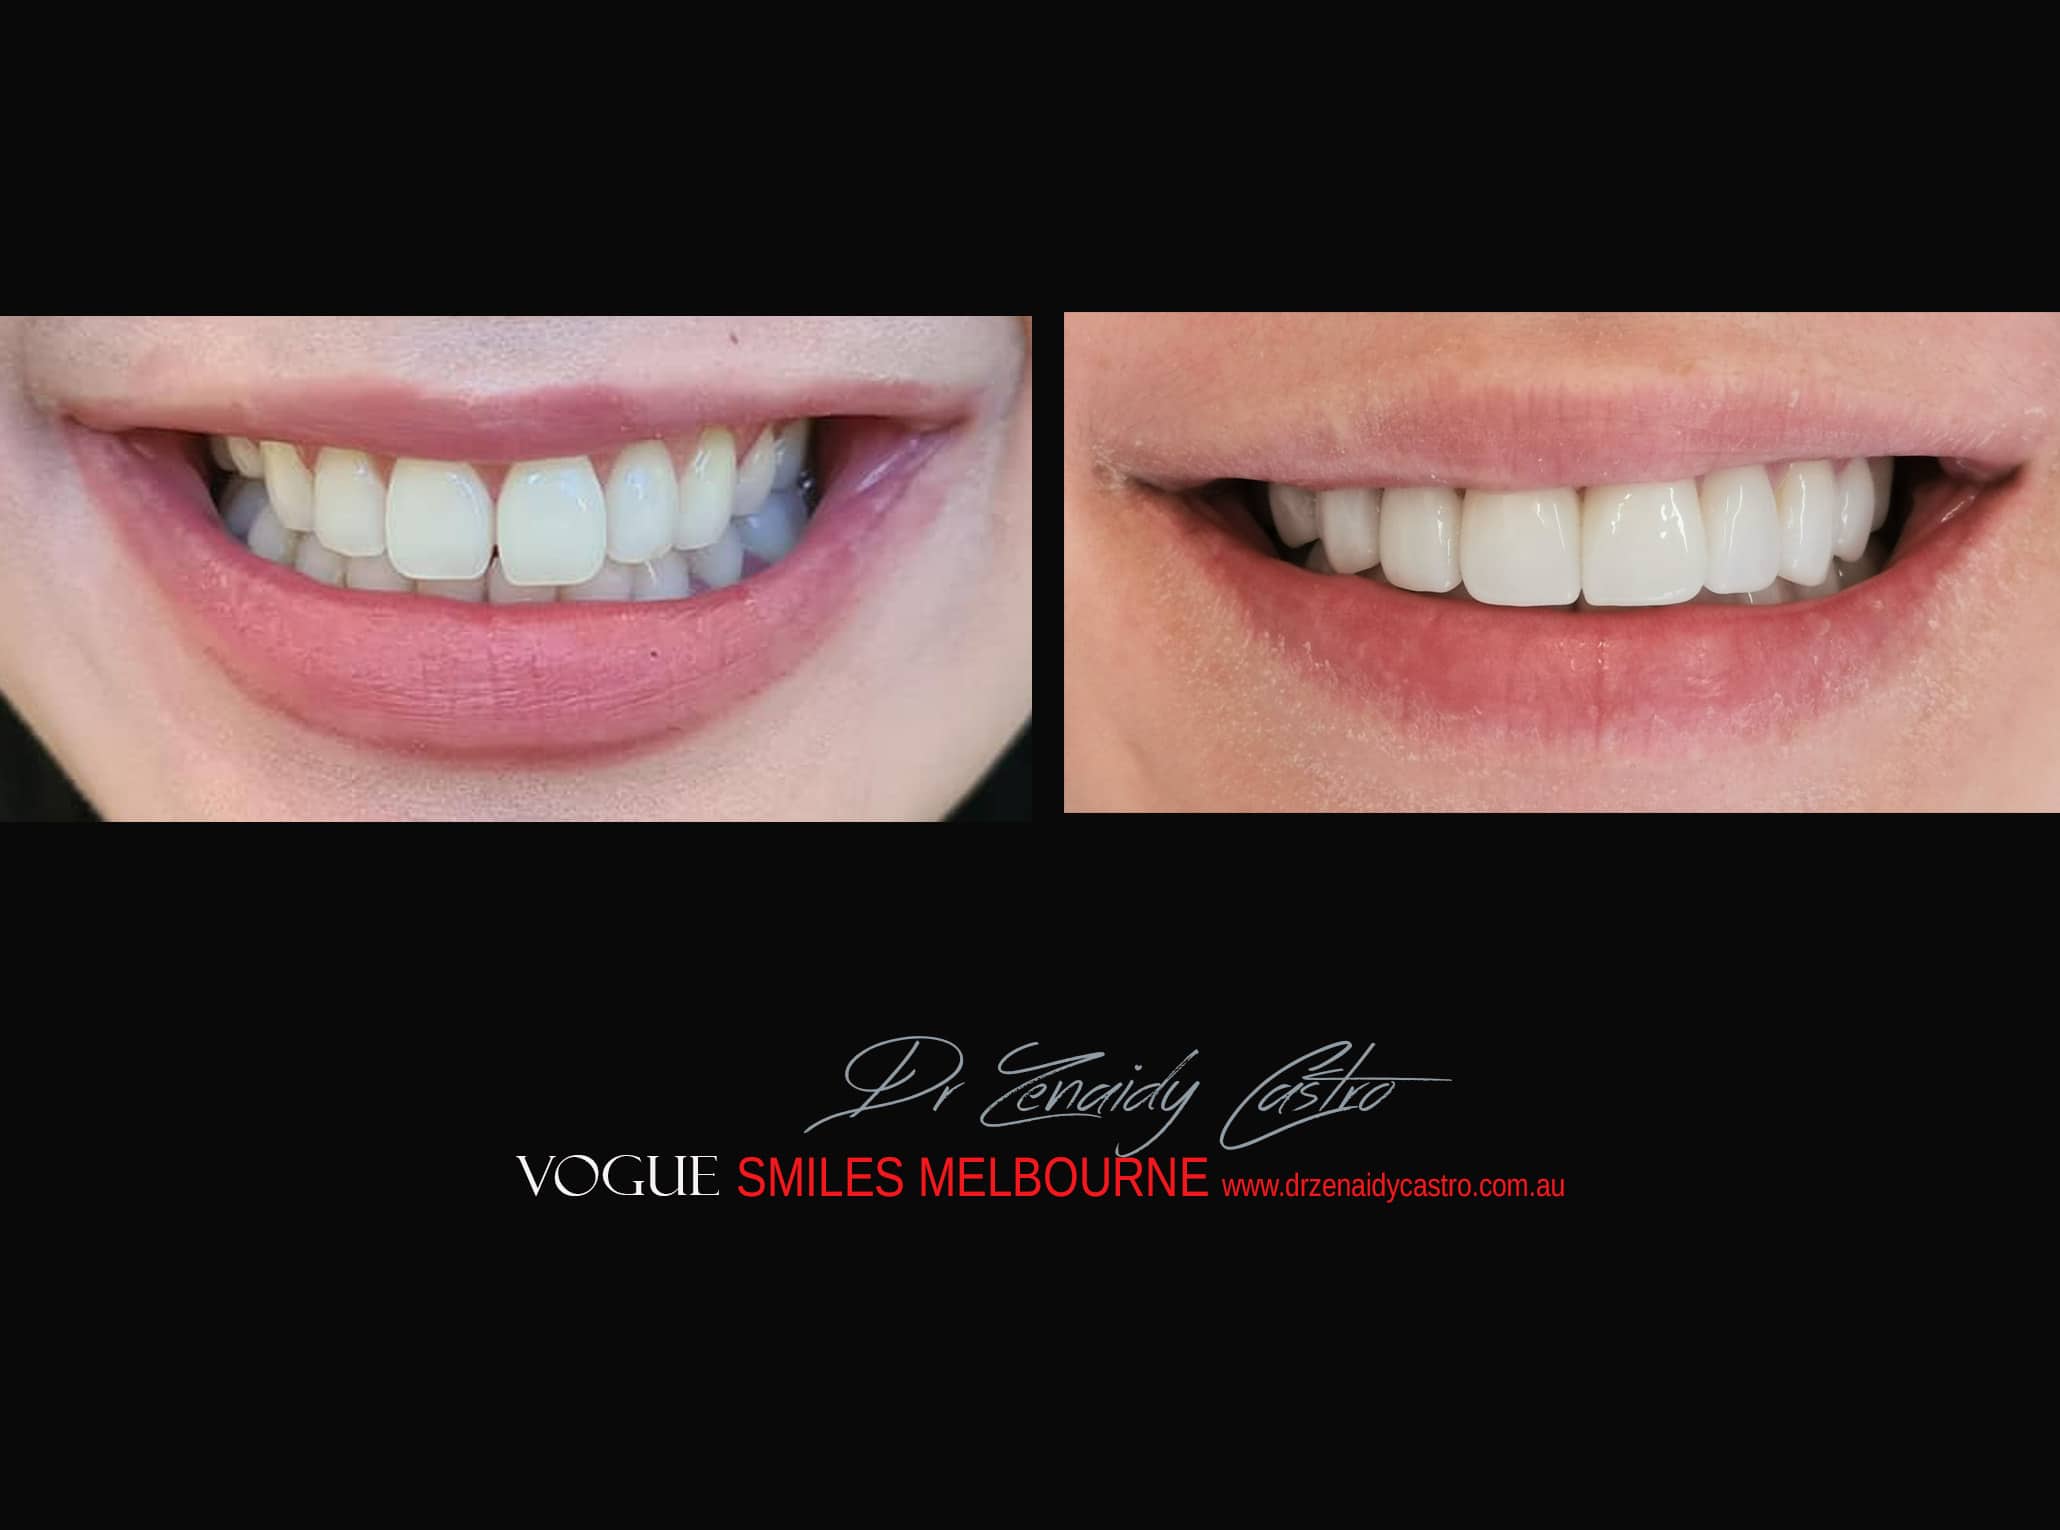 Aesthetic Dentistry Melbourne -Cosmetic Dentistry Melbourne -Best Cosmetic Dentist, Aesthetic Dentist Melbourne CBD Victoria, Australia - Dr Zenaidy Castro - VOGUE SMILES MELBOURNE